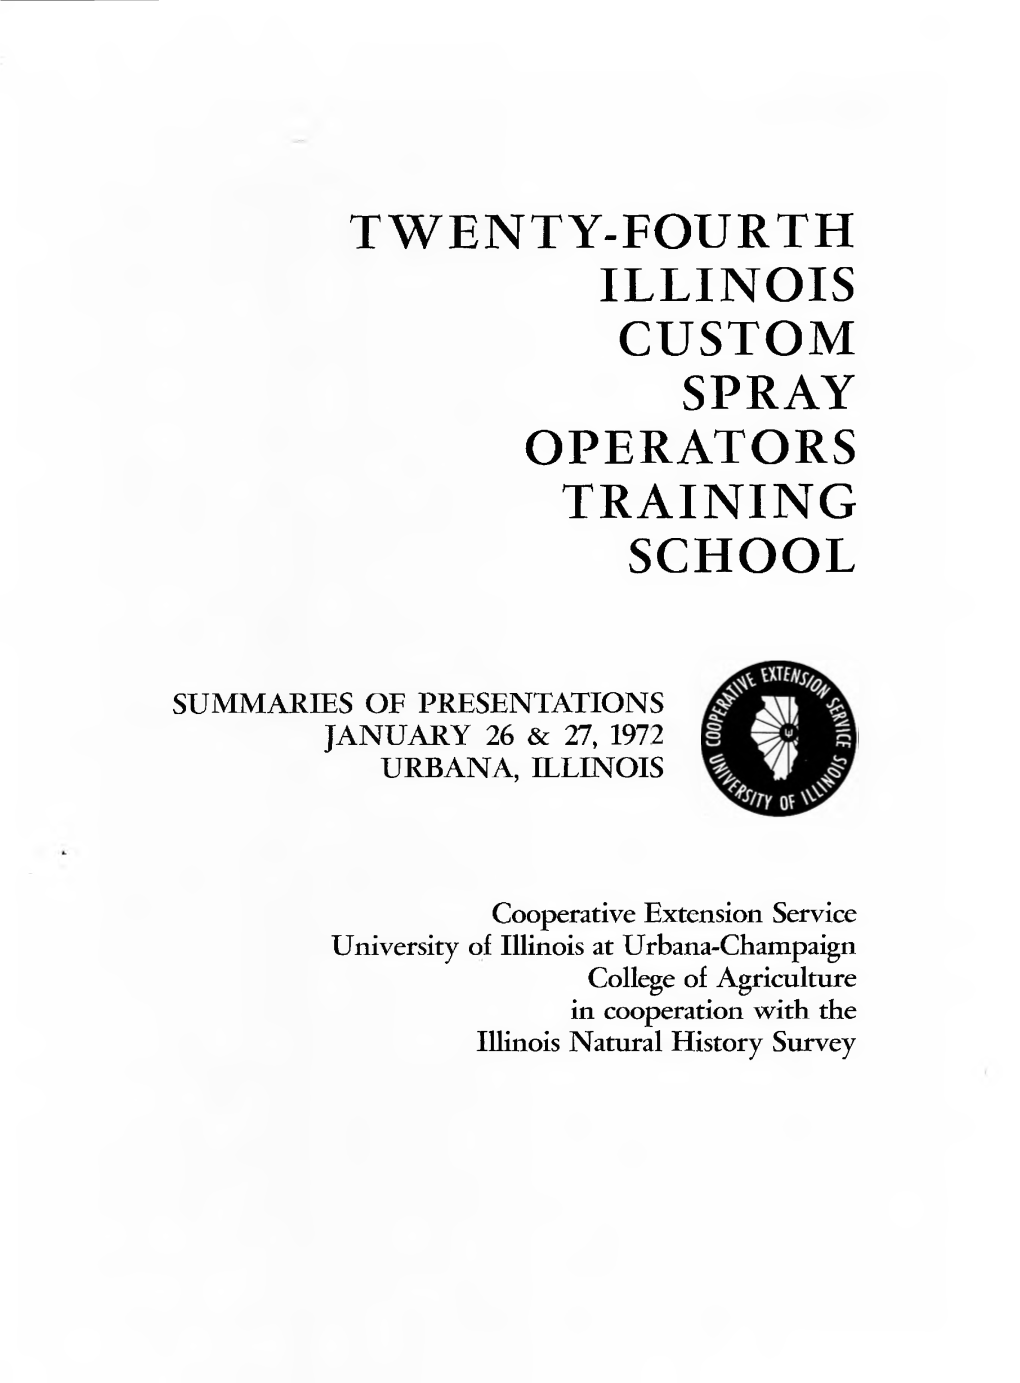 Twenty-Fourth Illinois Custom Spray Operators Training School